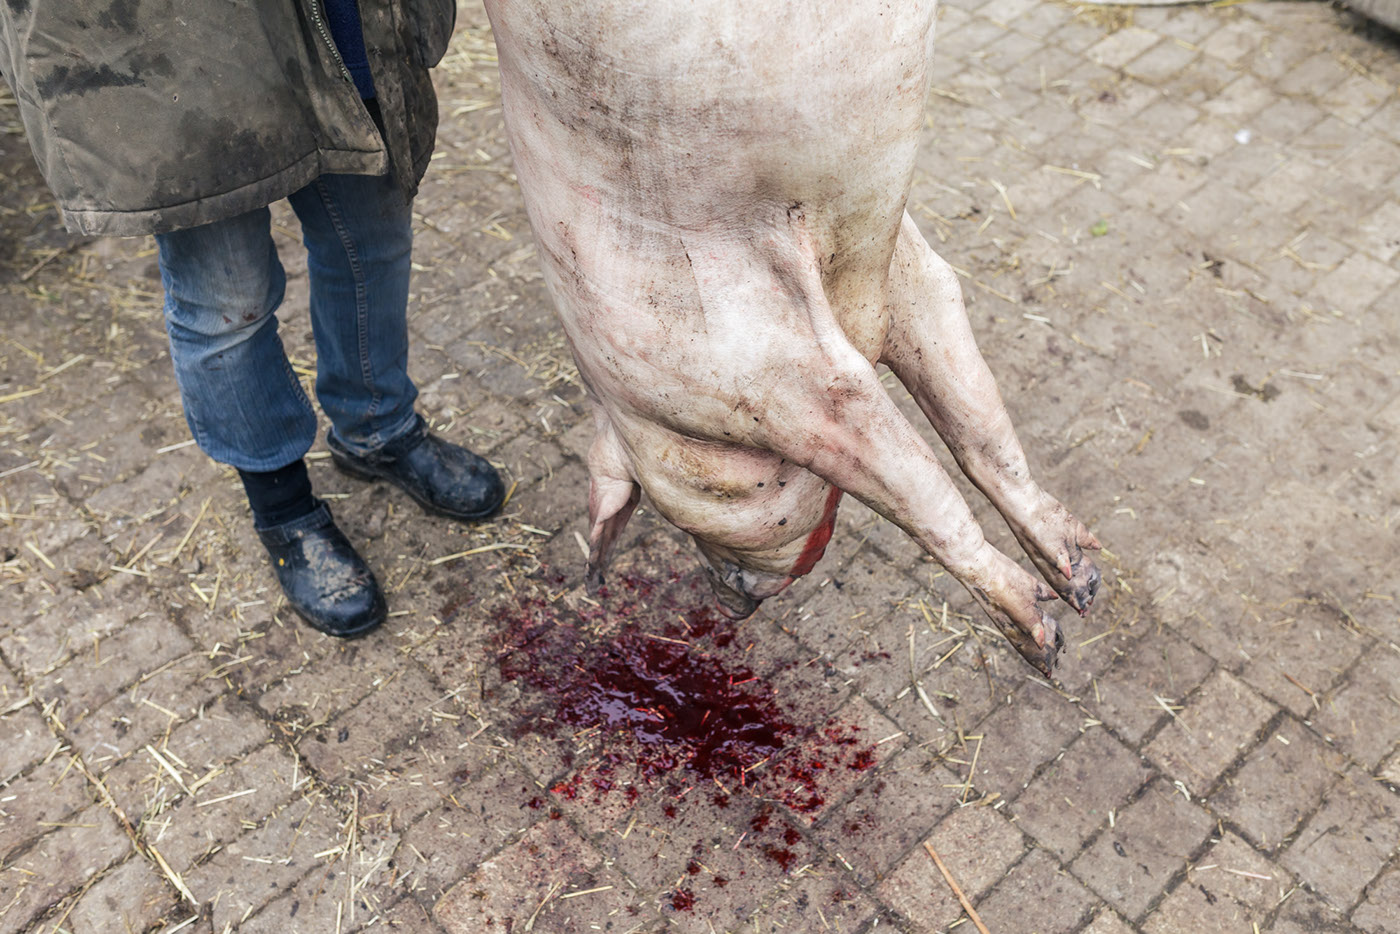 reportage mangalica pig meat farmers carnivore omnivore